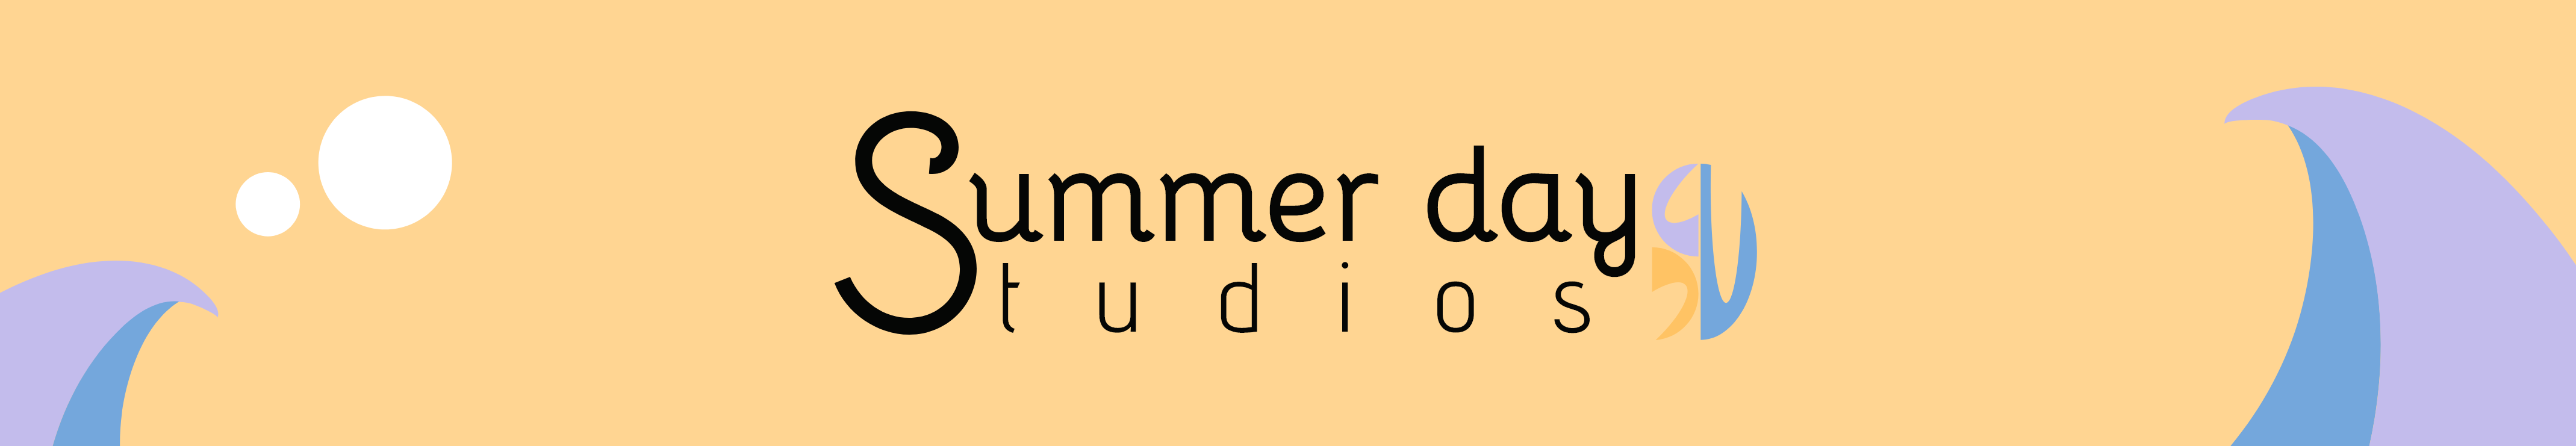 Summer Day Studioss profilbanner